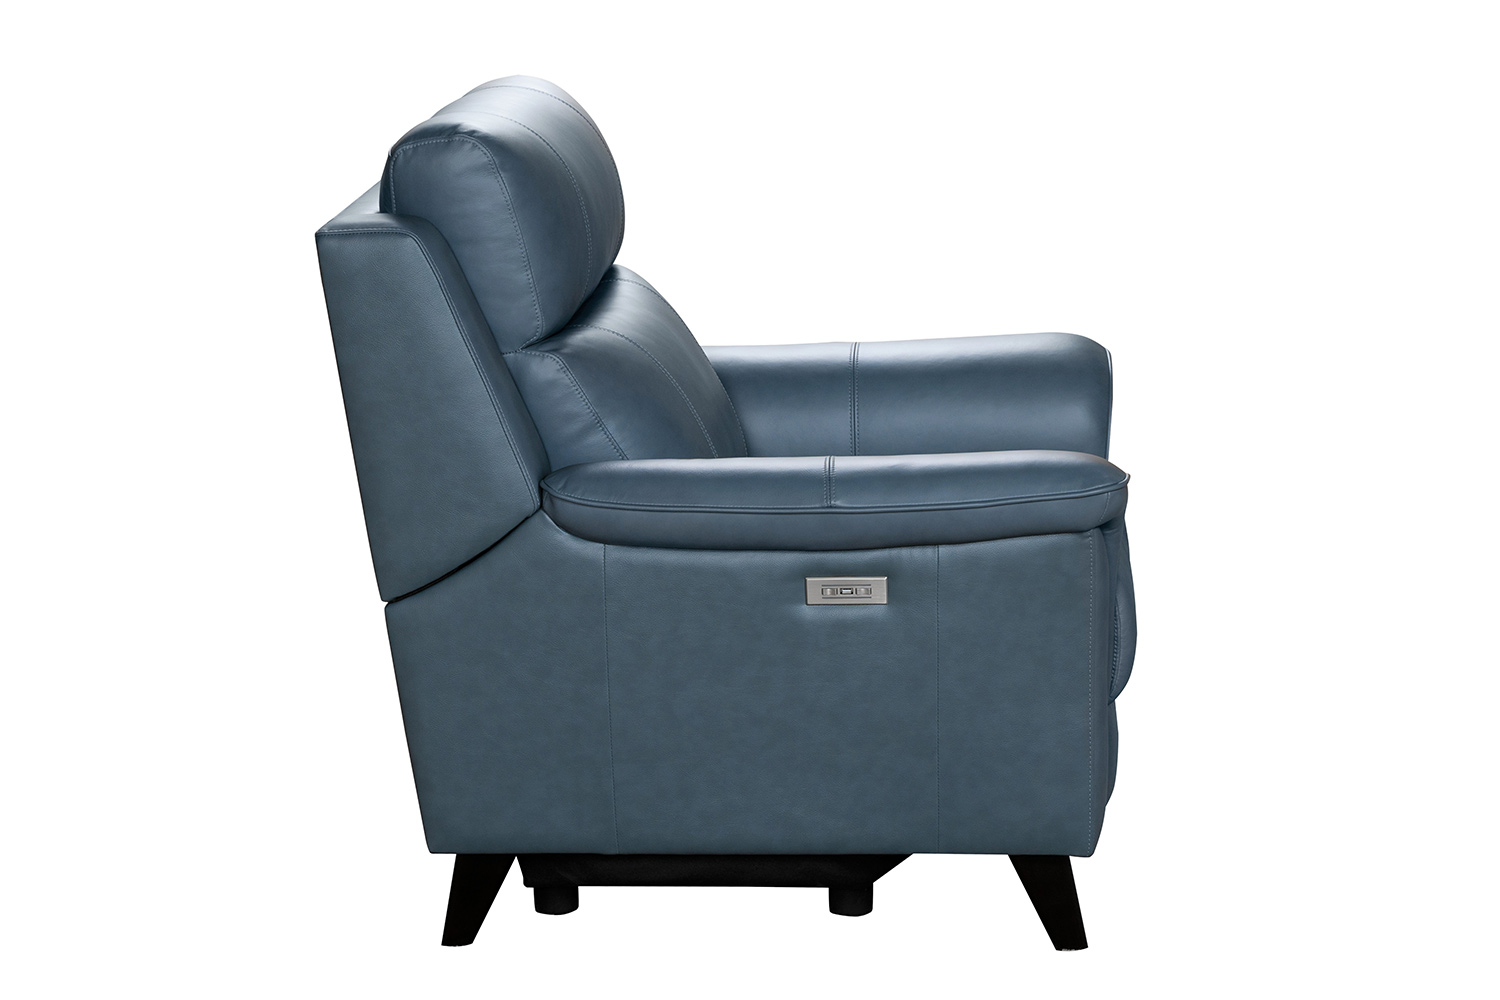 Barcalounger Kester Power Recliner Chair with Power Head Rest - Masen Bluegray/Leather match